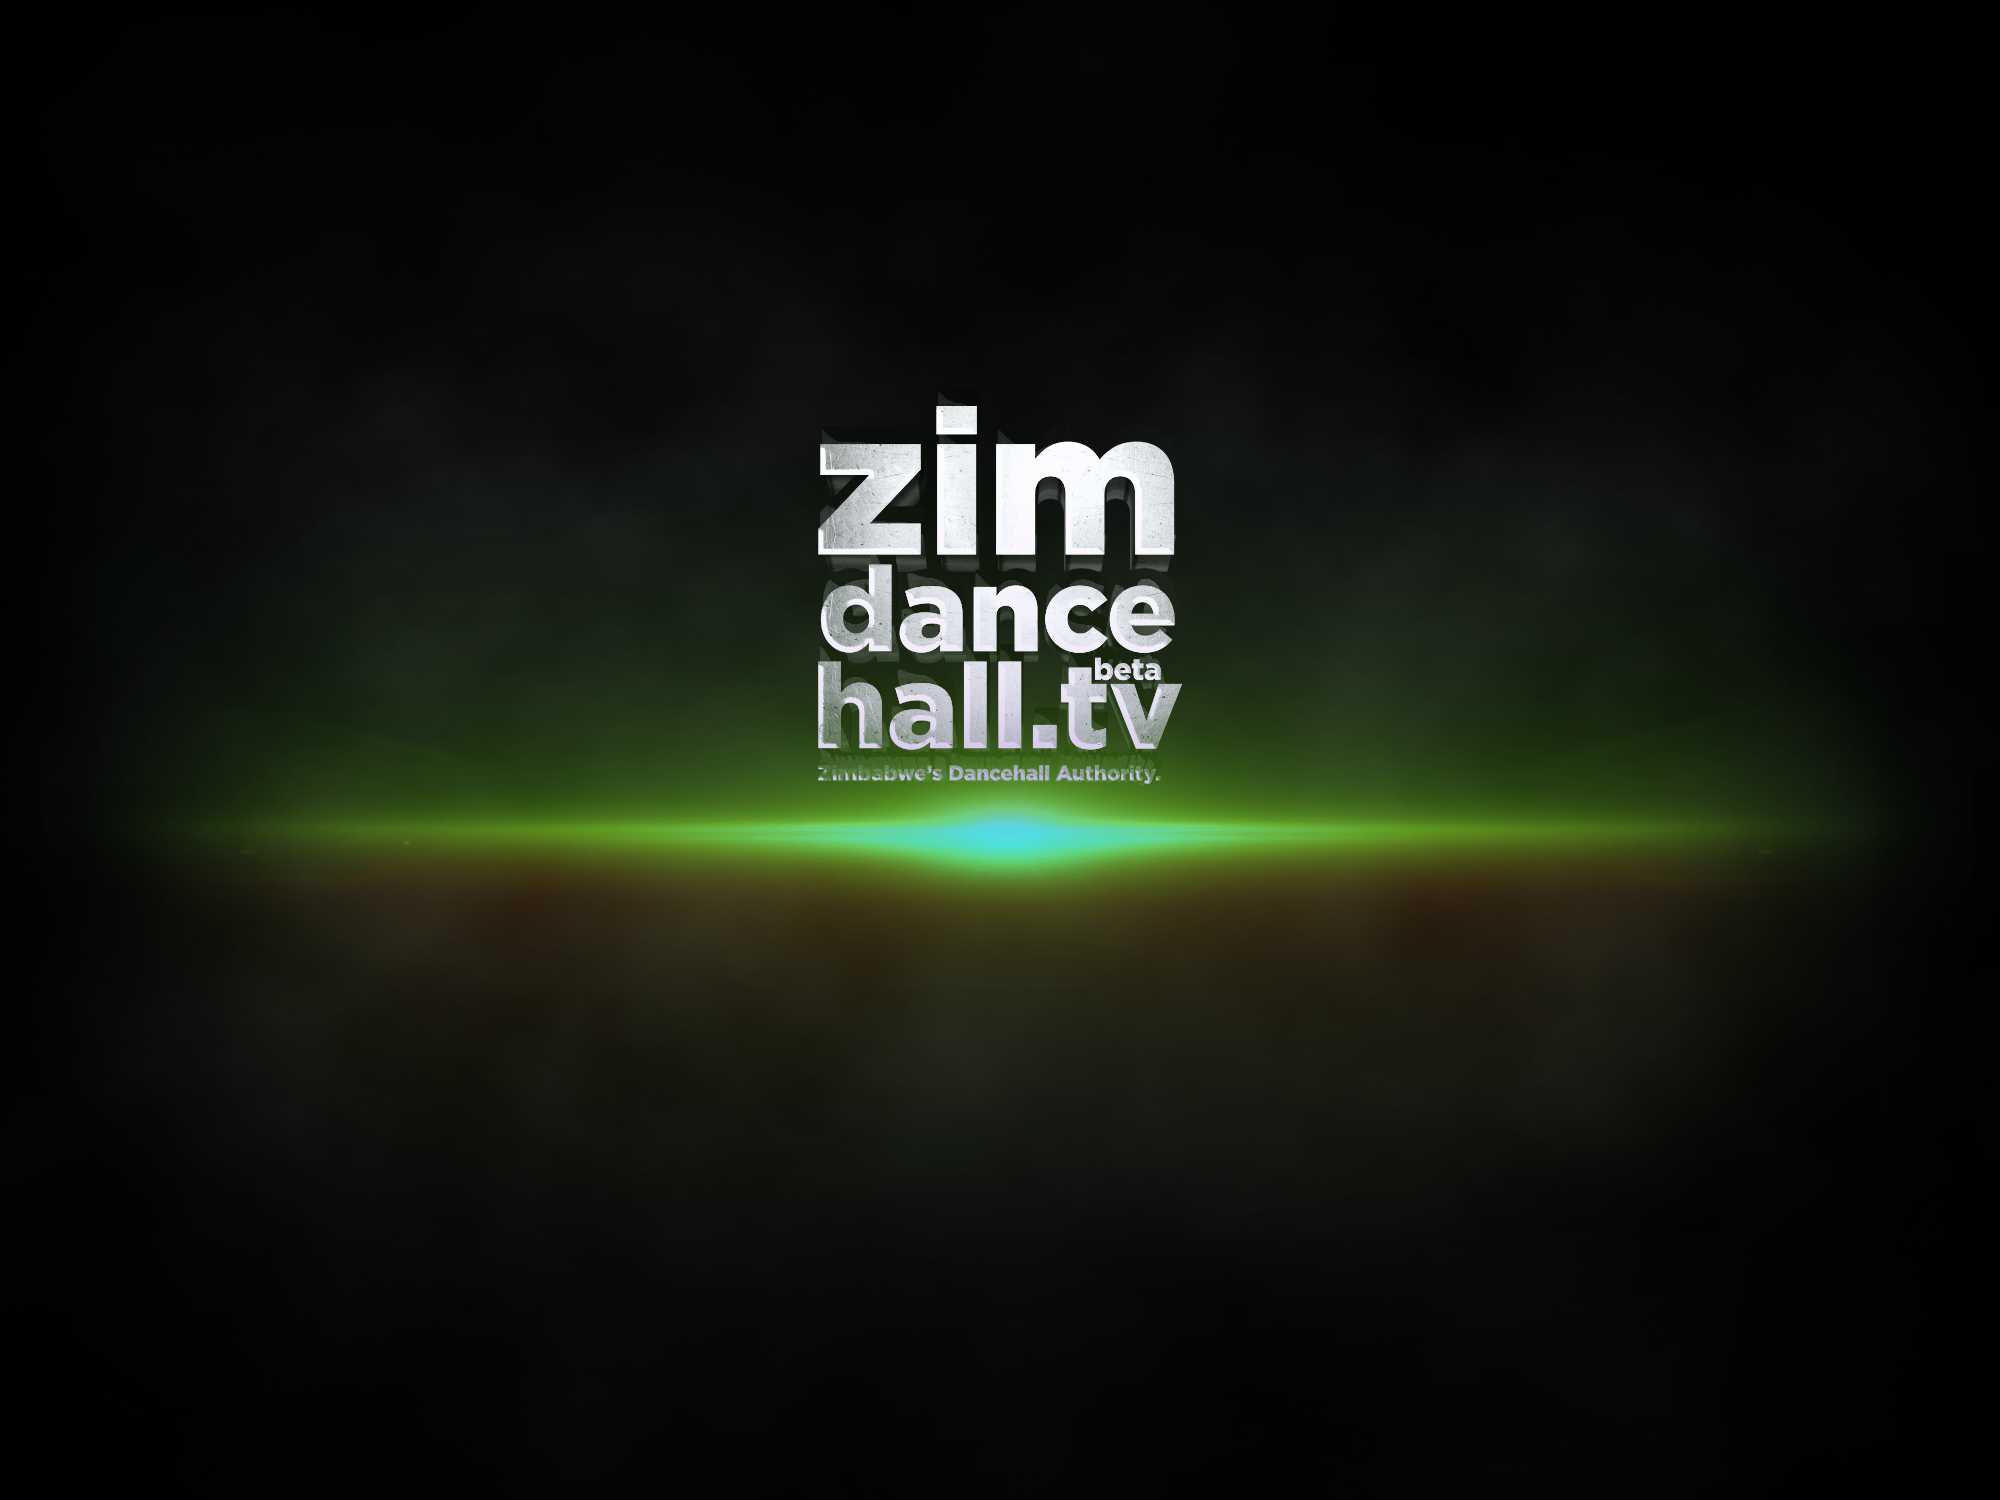 ZimdancehallTV